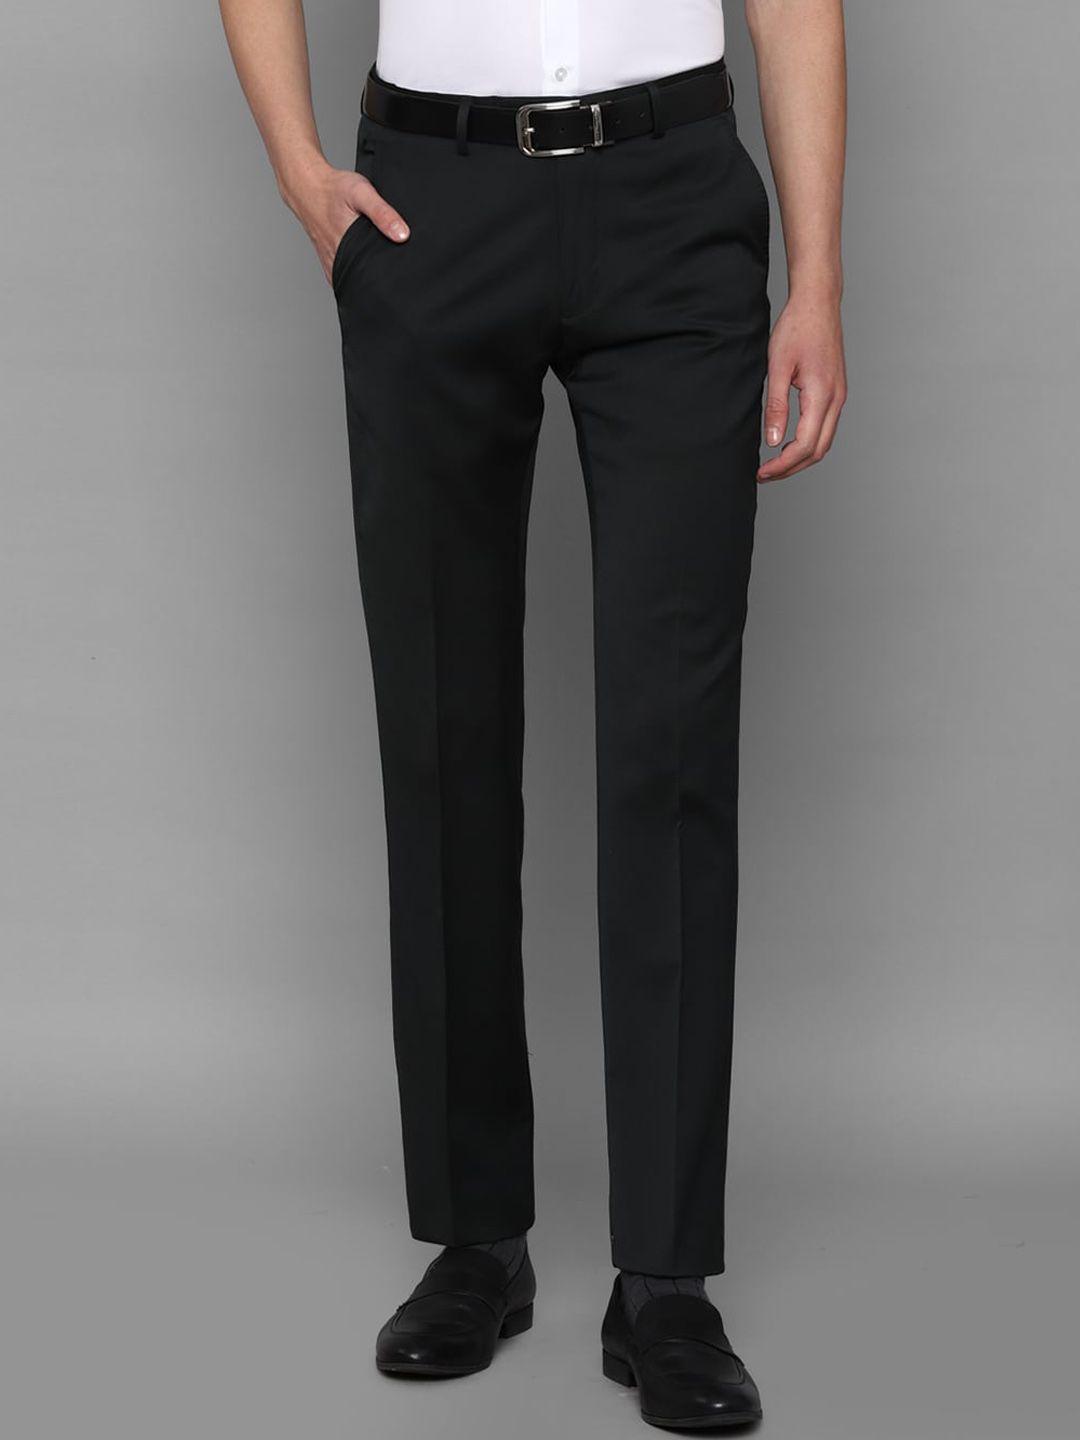 louis-philippe-men-black-regular-fit-solid-trousers